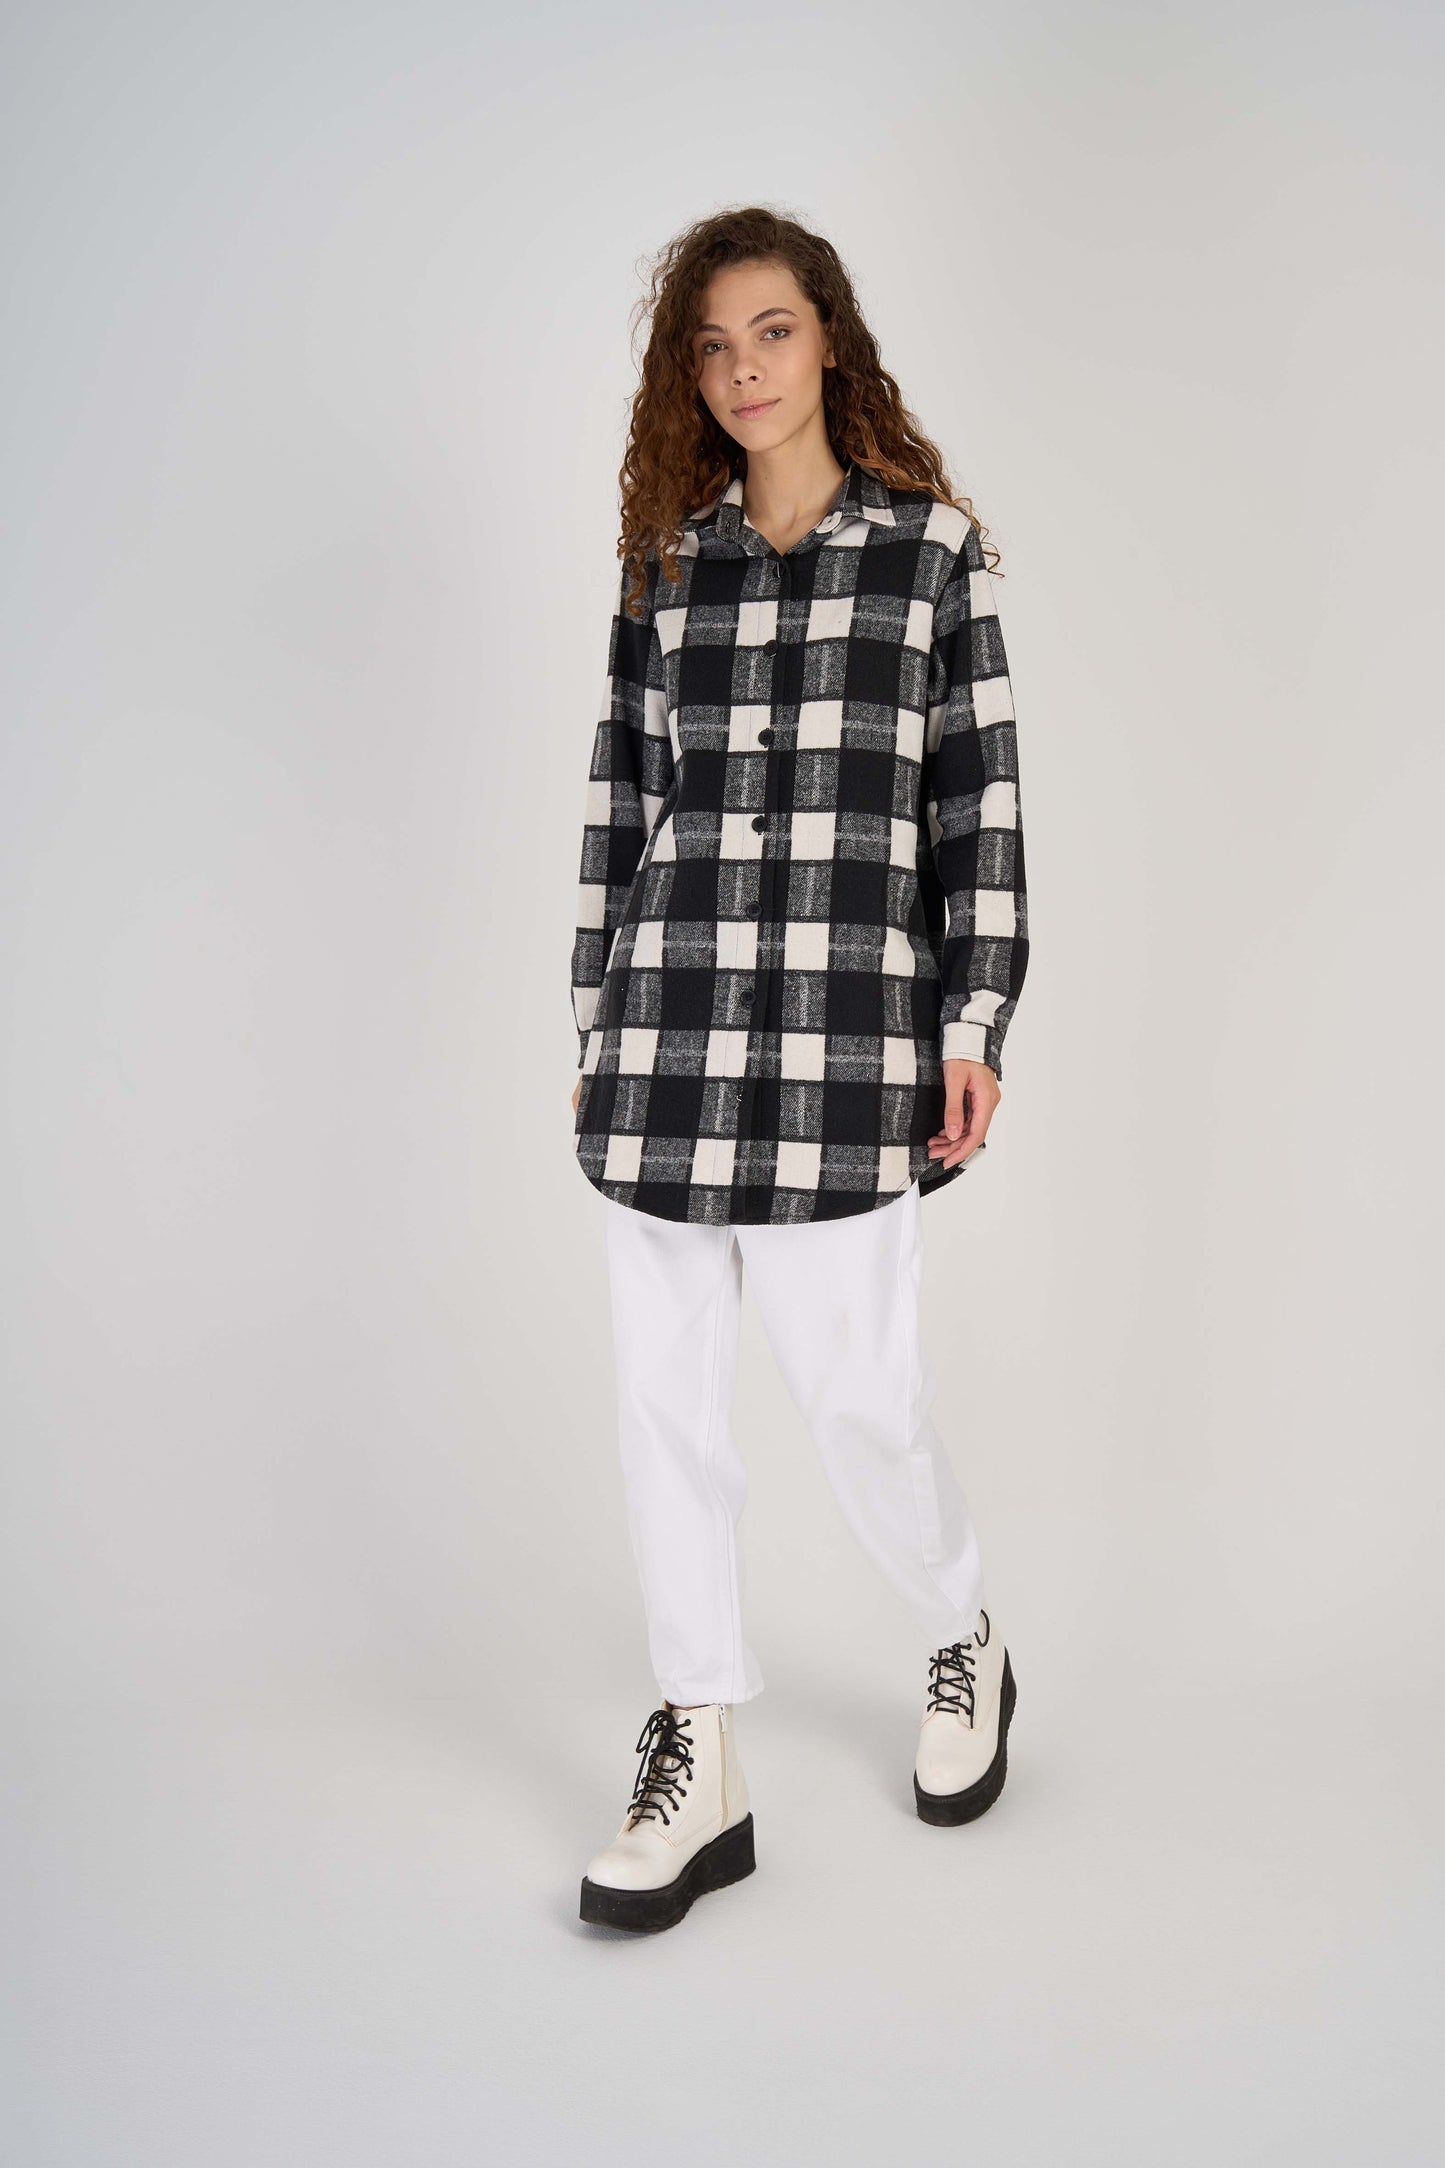 Checkered Shirt That Mixes White And Black